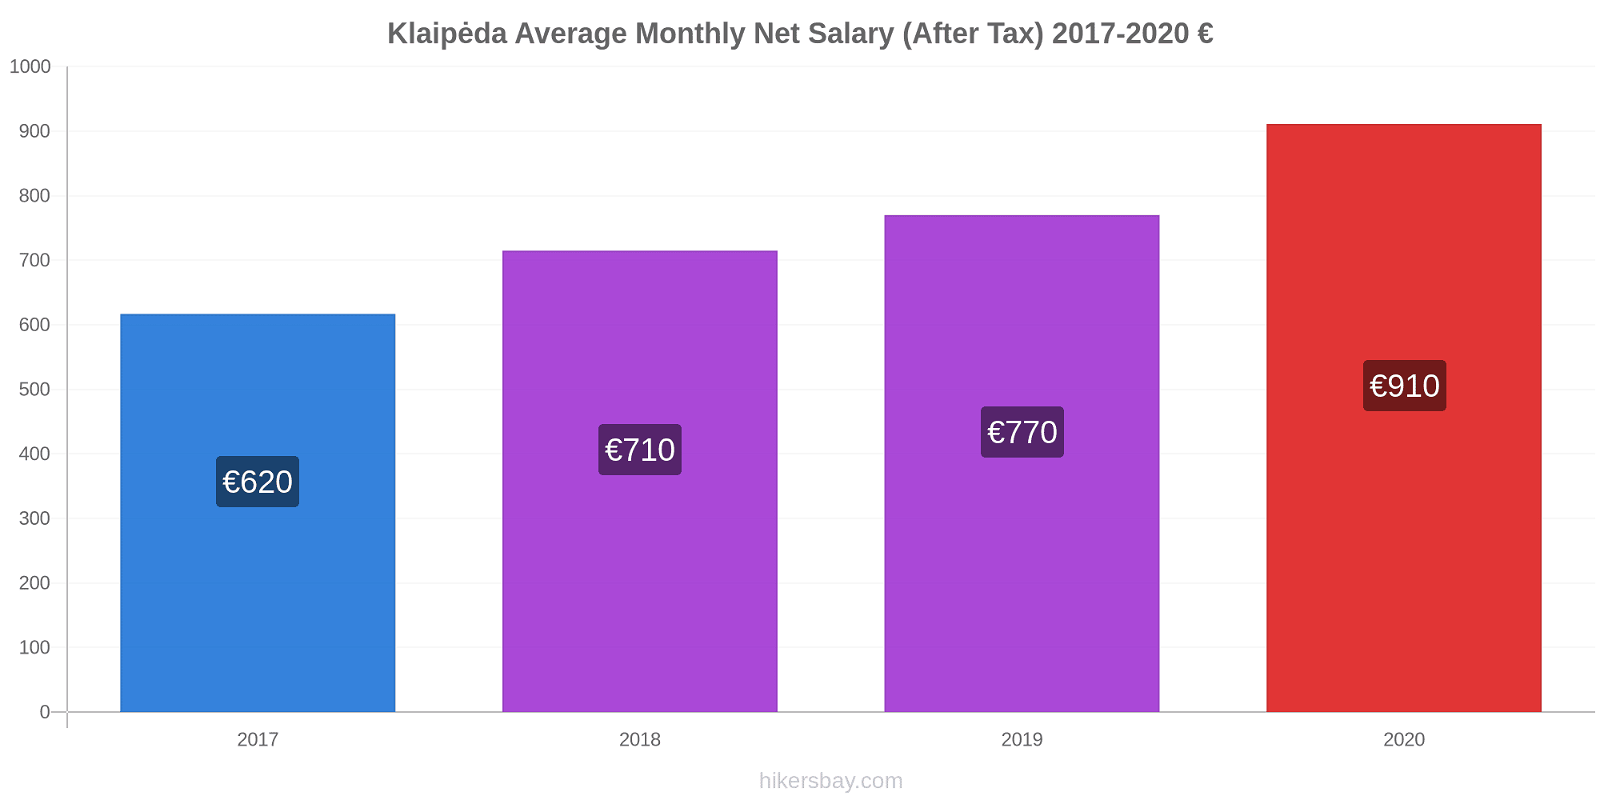 Klaipėda price changes Average Monthly Net Salary (After Tax) hikersbay.com